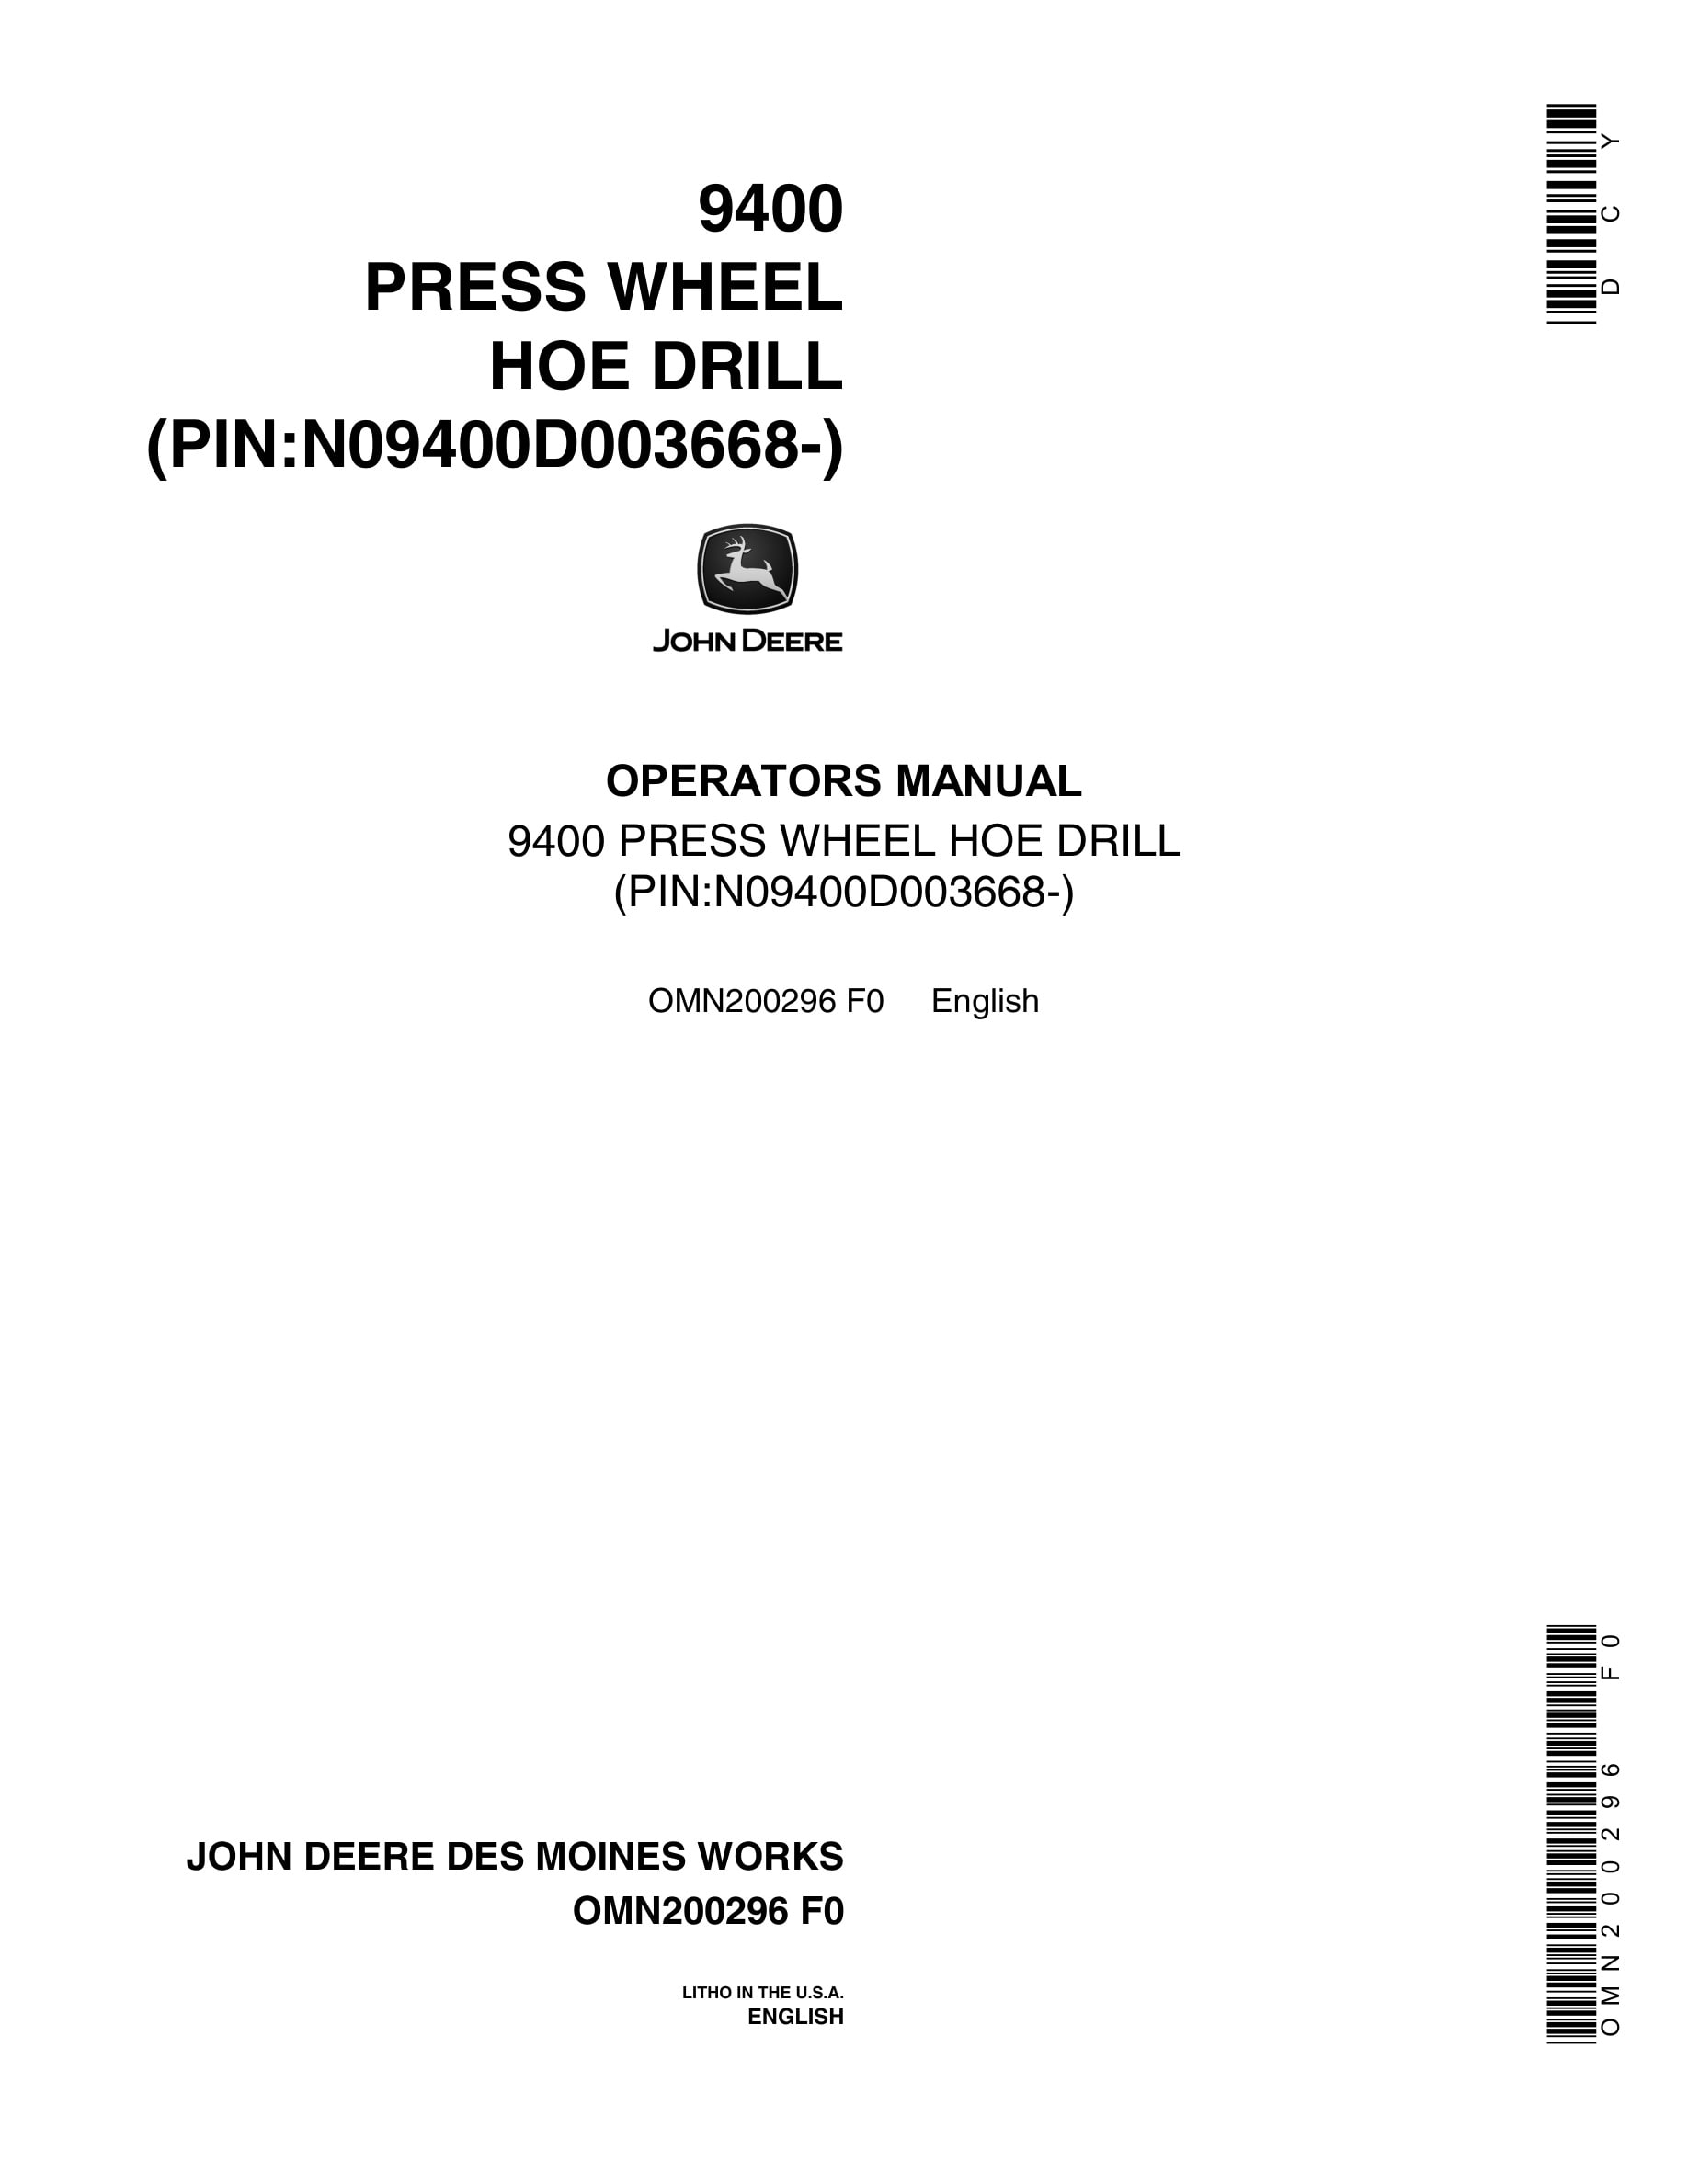 John Deere 9400 PRESS WHEEL HOE DRILL Operator Manual OMN200296-1